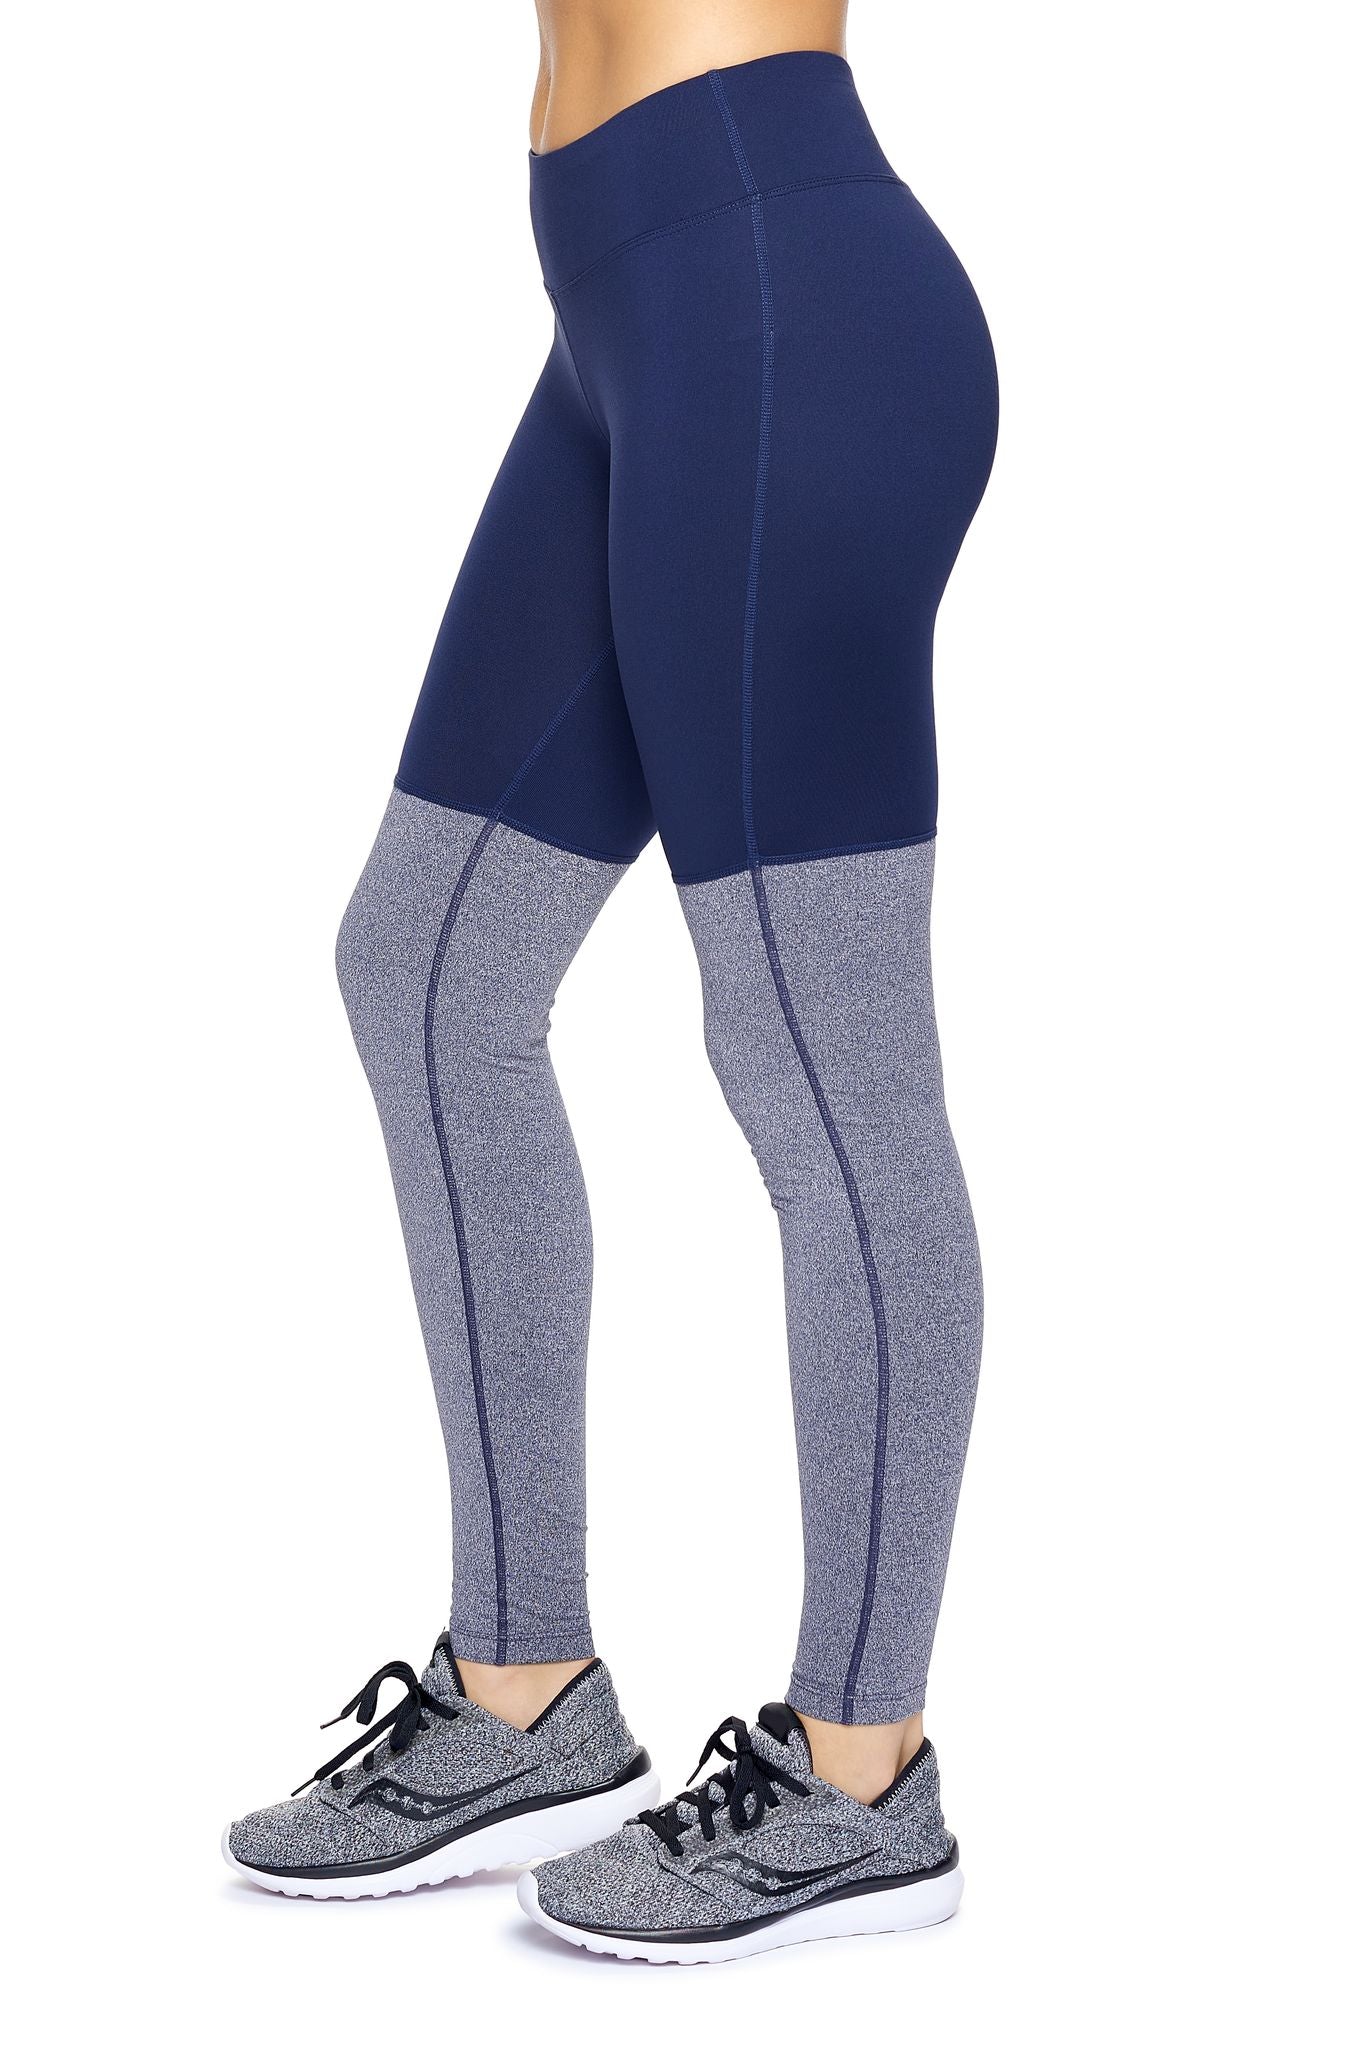 AQ1028 Mid-Rise Heather Colorblock Leggings - Expert Brand #HEATHER NAVY